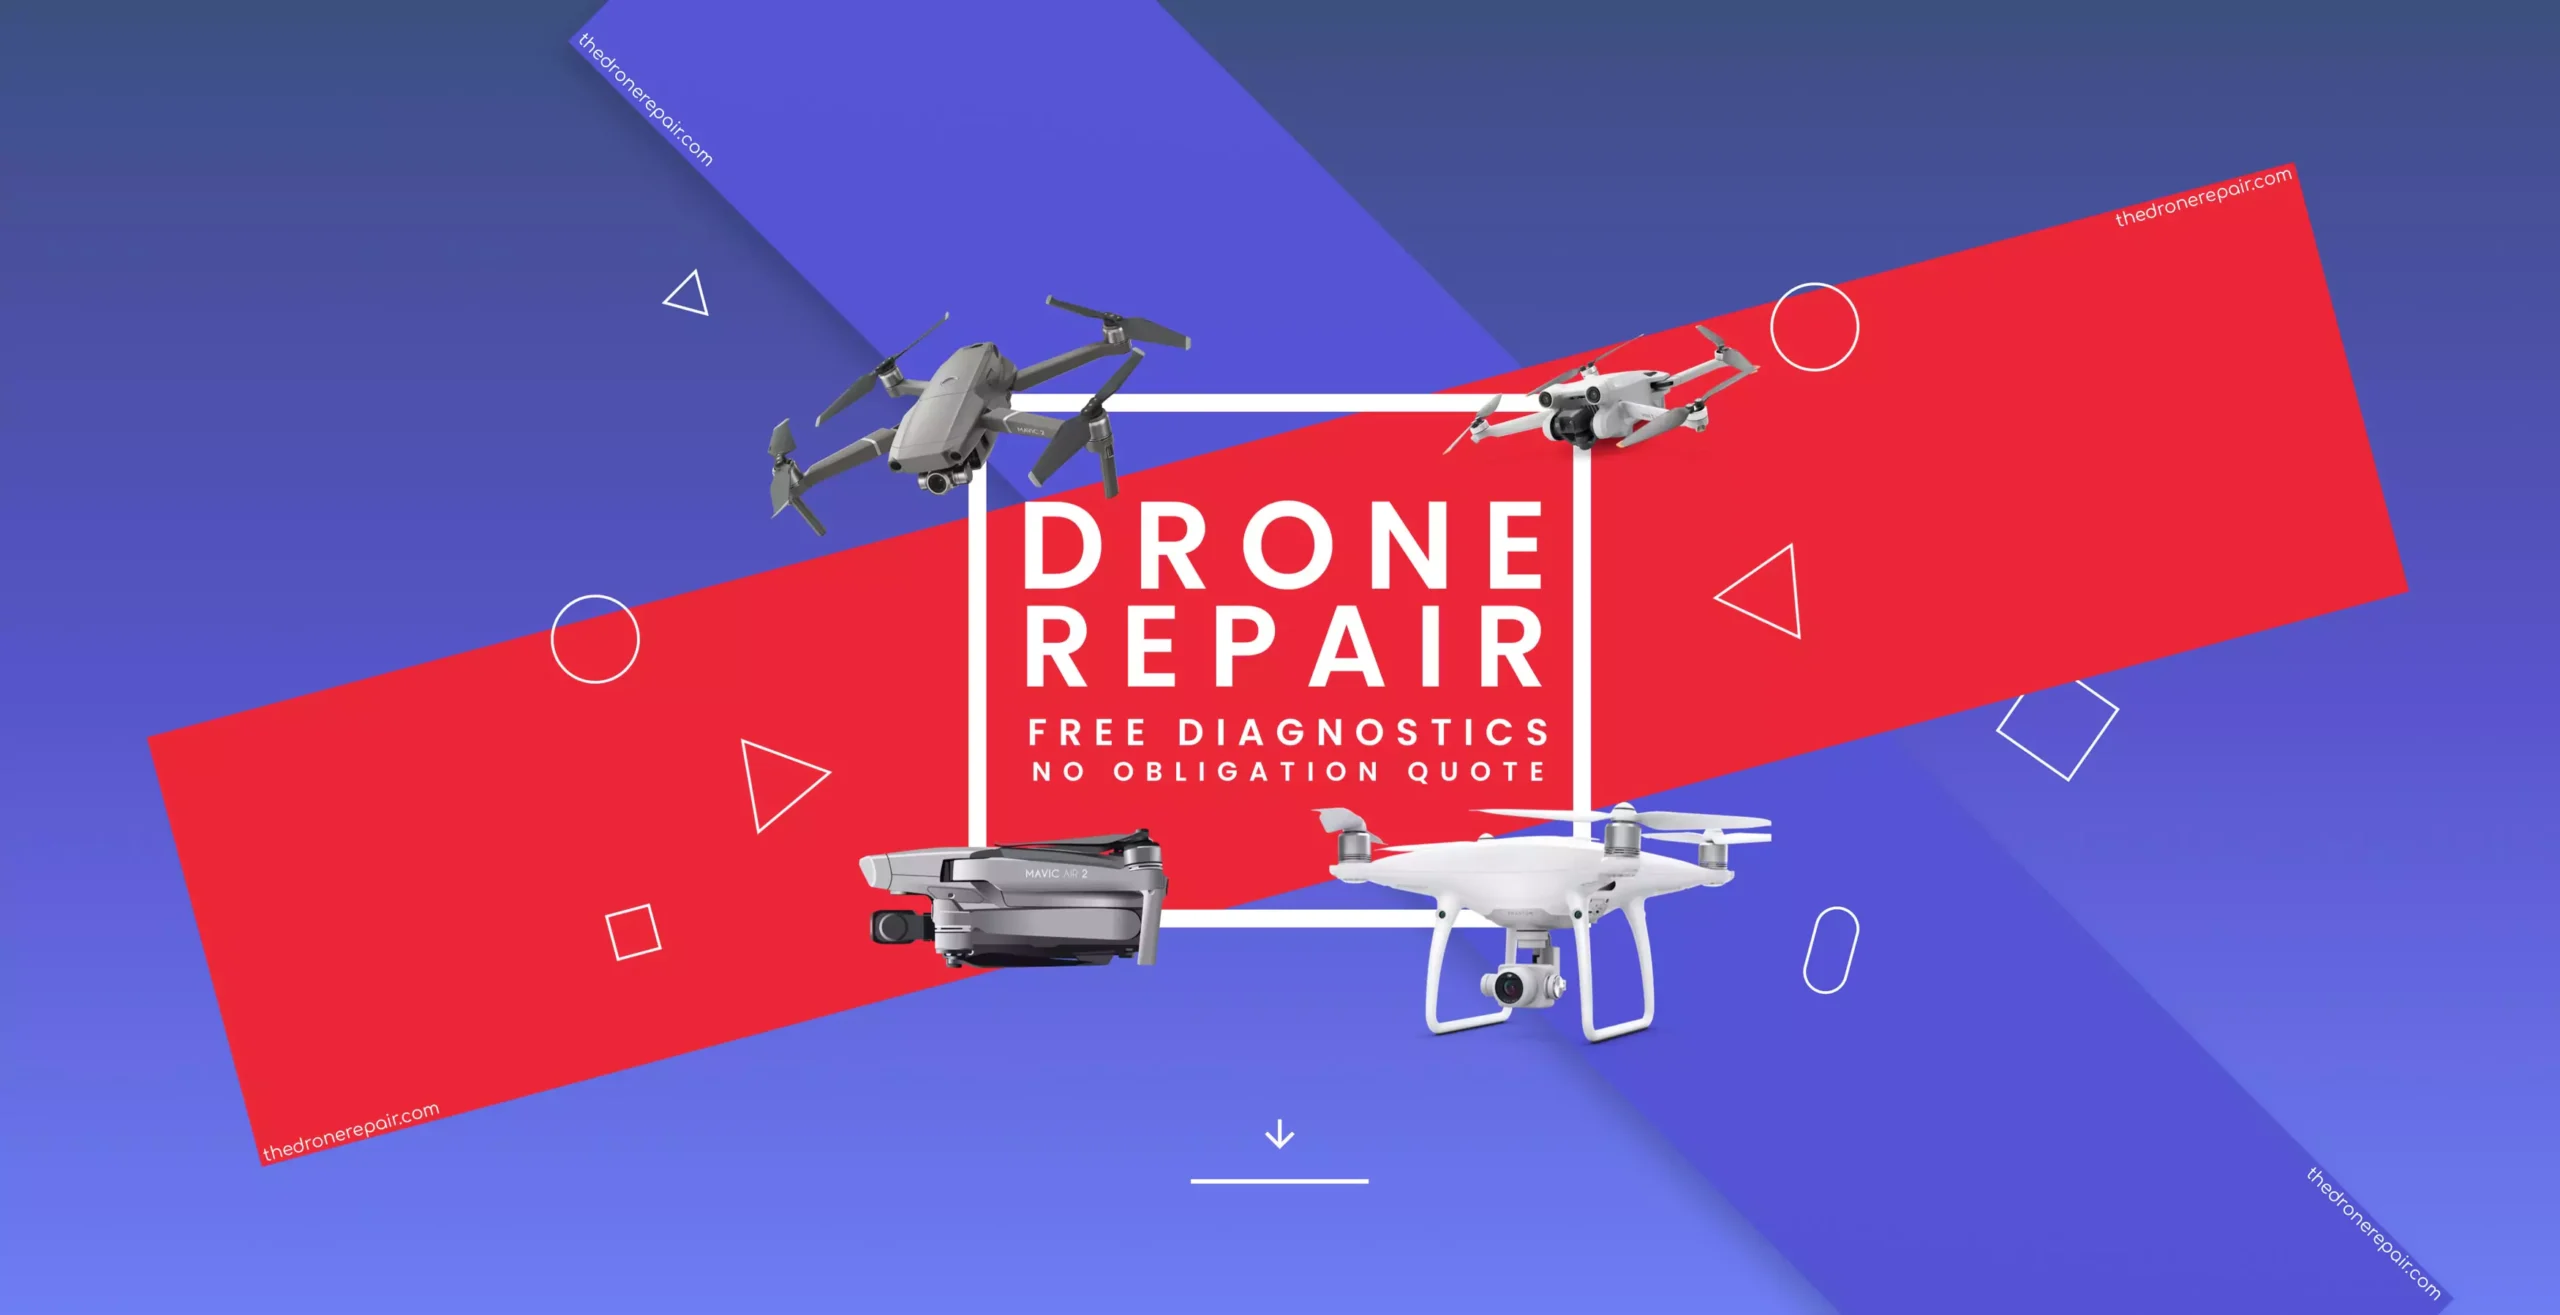 DJI Drone Repair Services Los Angeles California